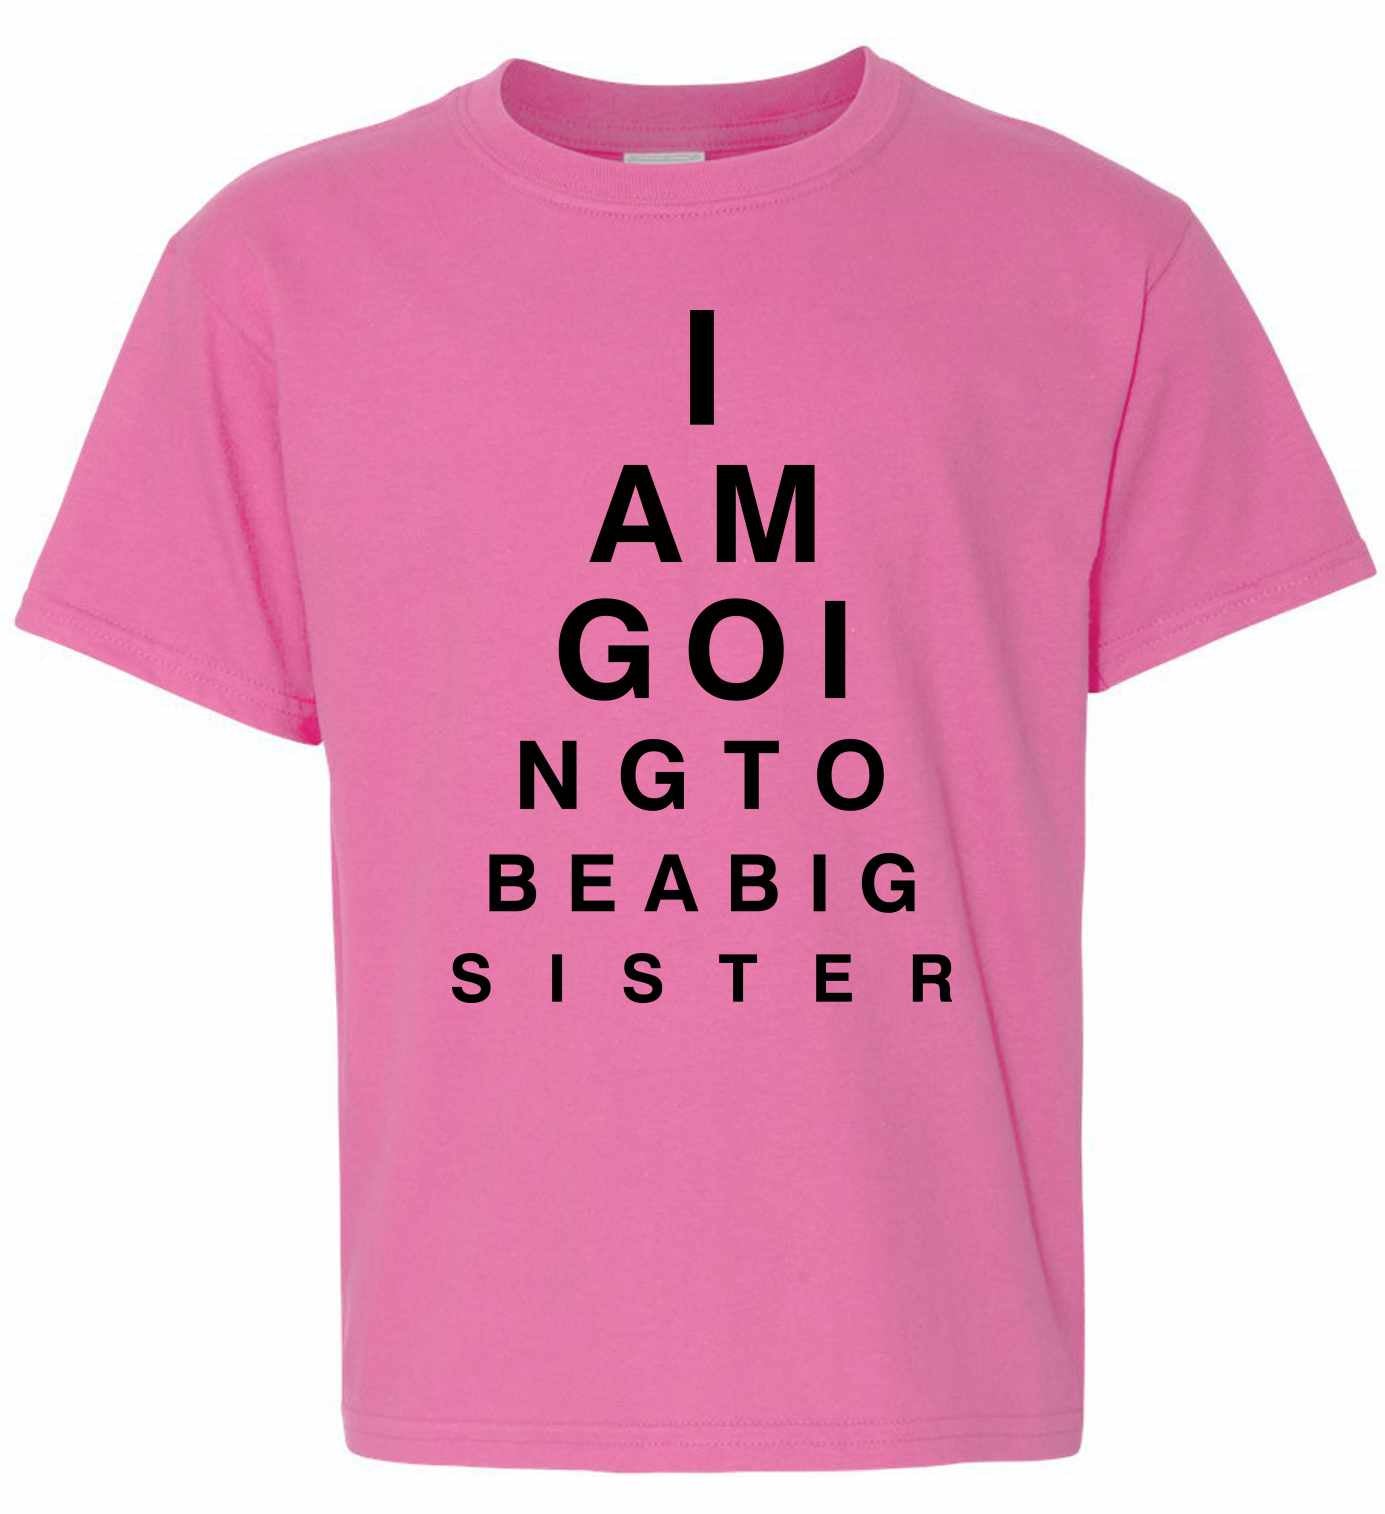 I AM GOING TO BE BIG SISTER EYE CHART on Kids T-Shirt (#1099-201)